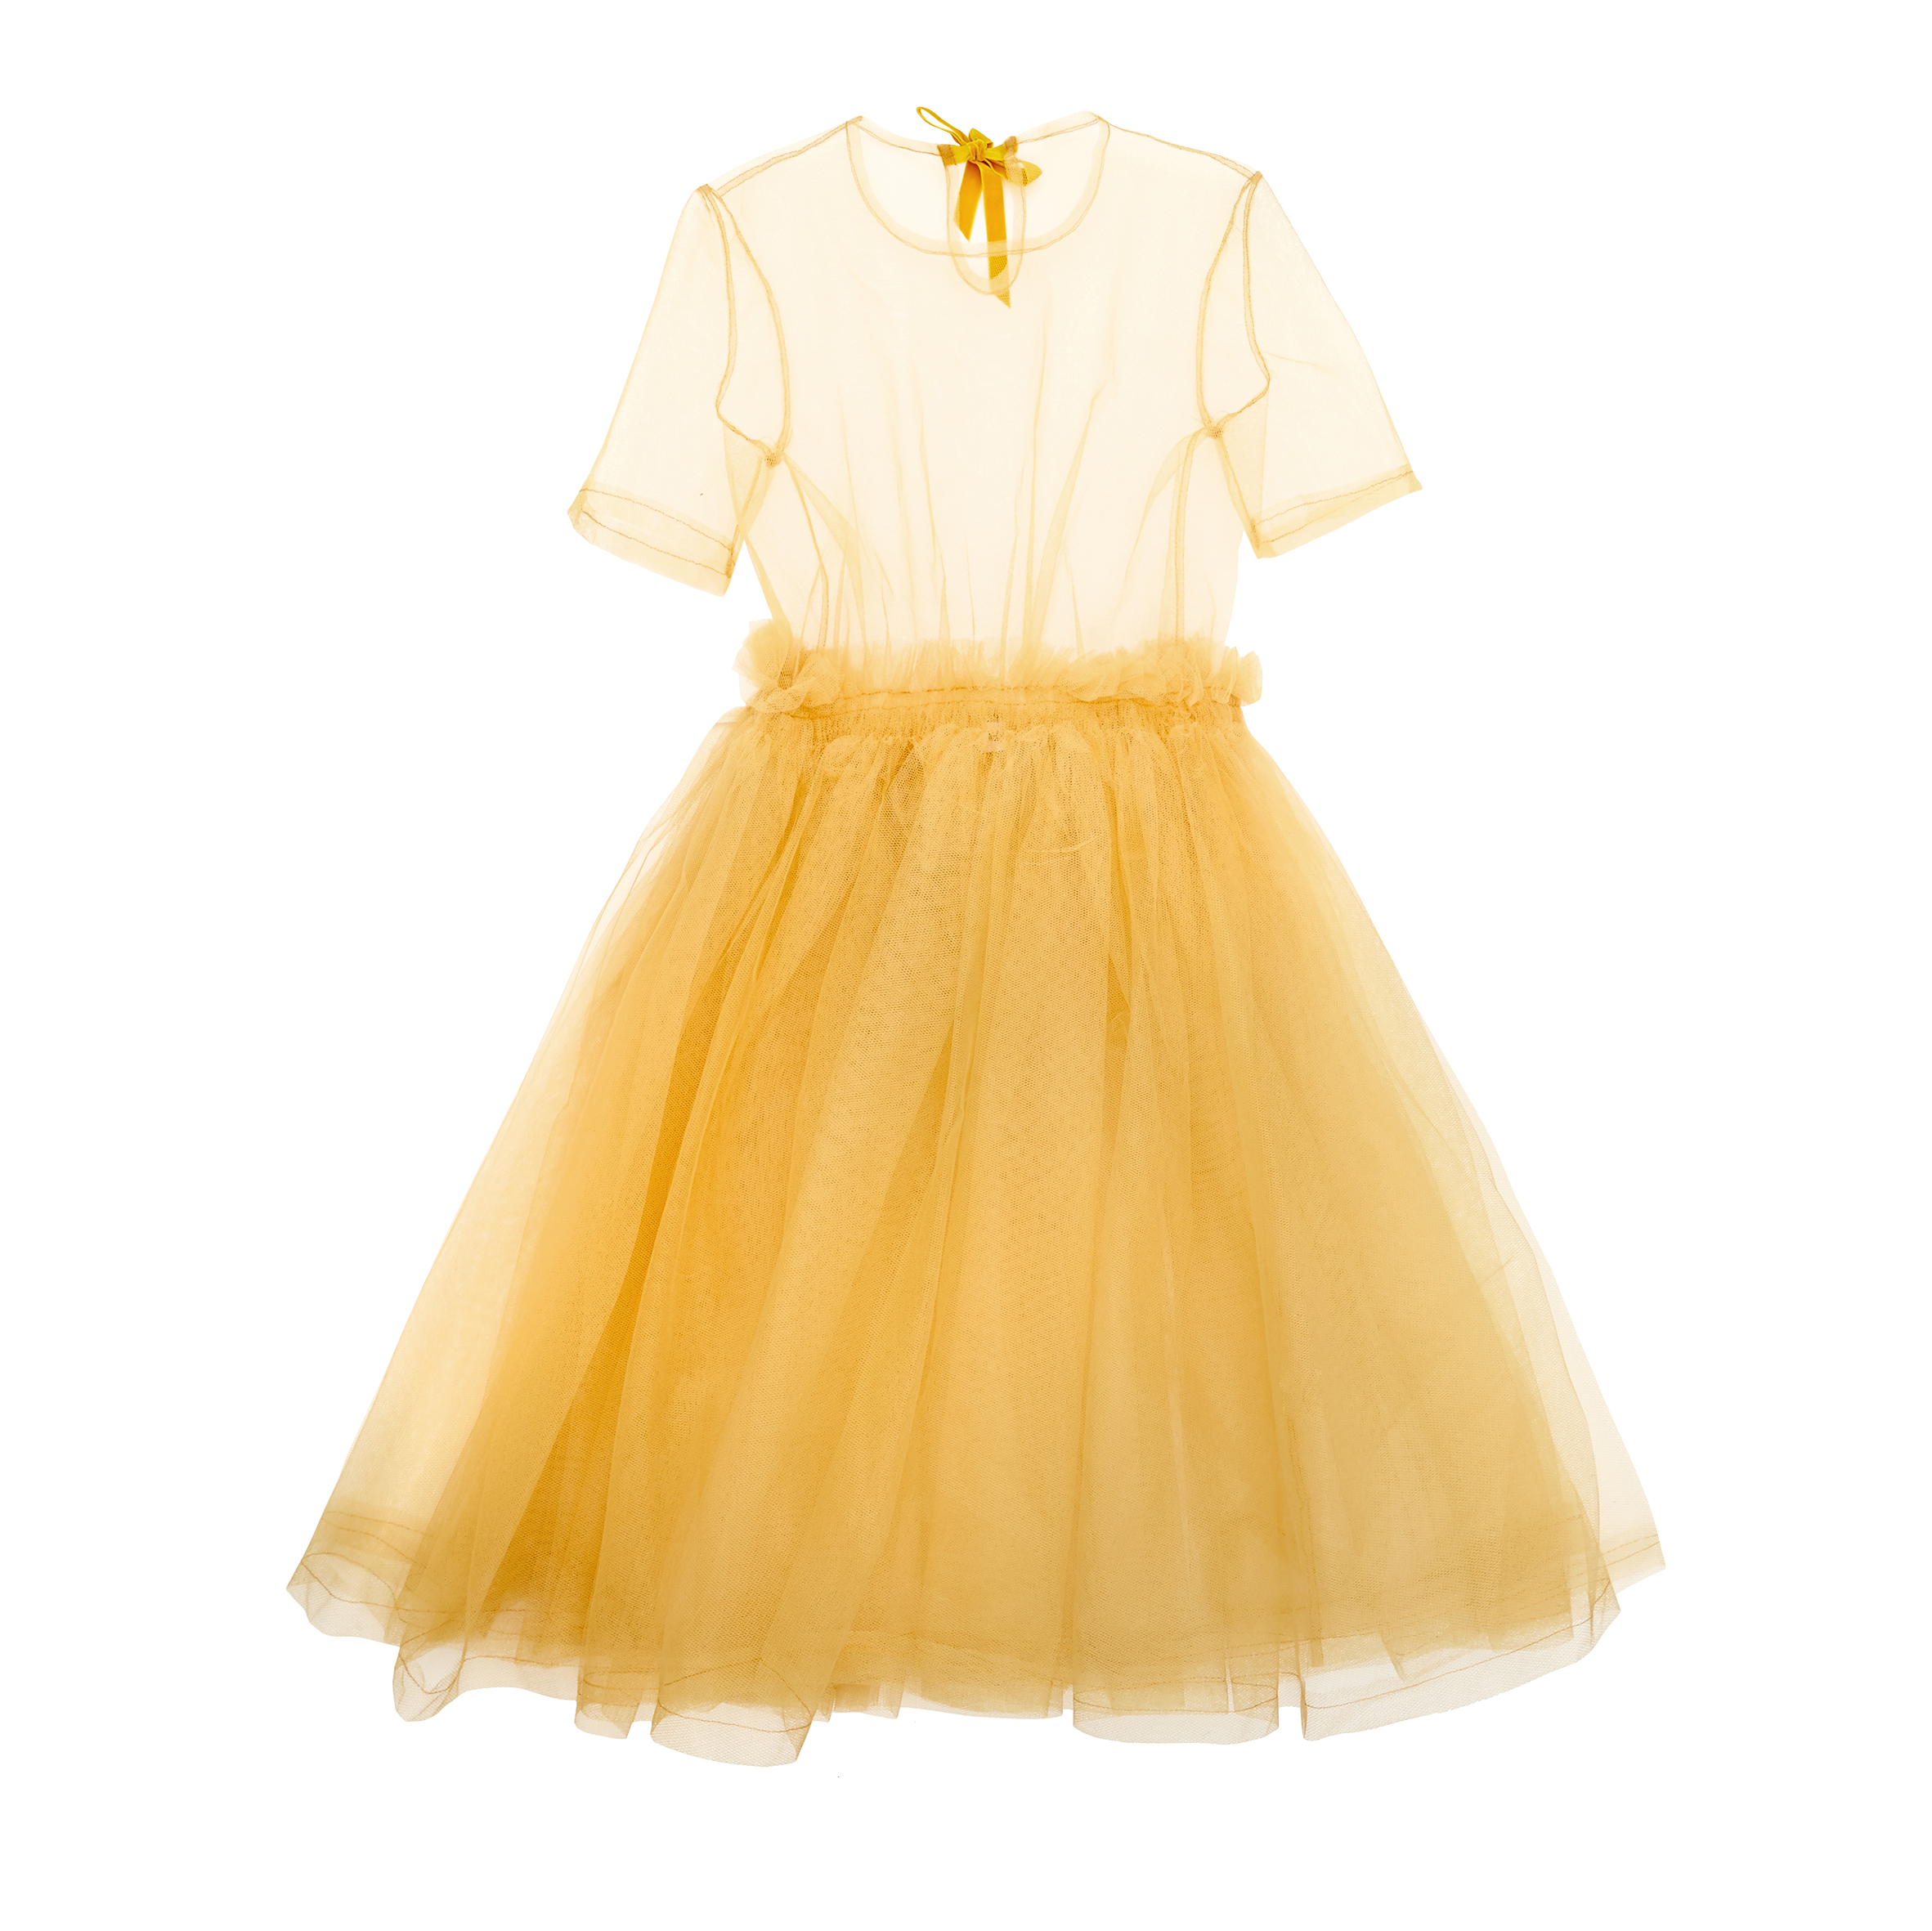 Molly Goddard poly taffeta dress, £790, doverstreetmarket.com